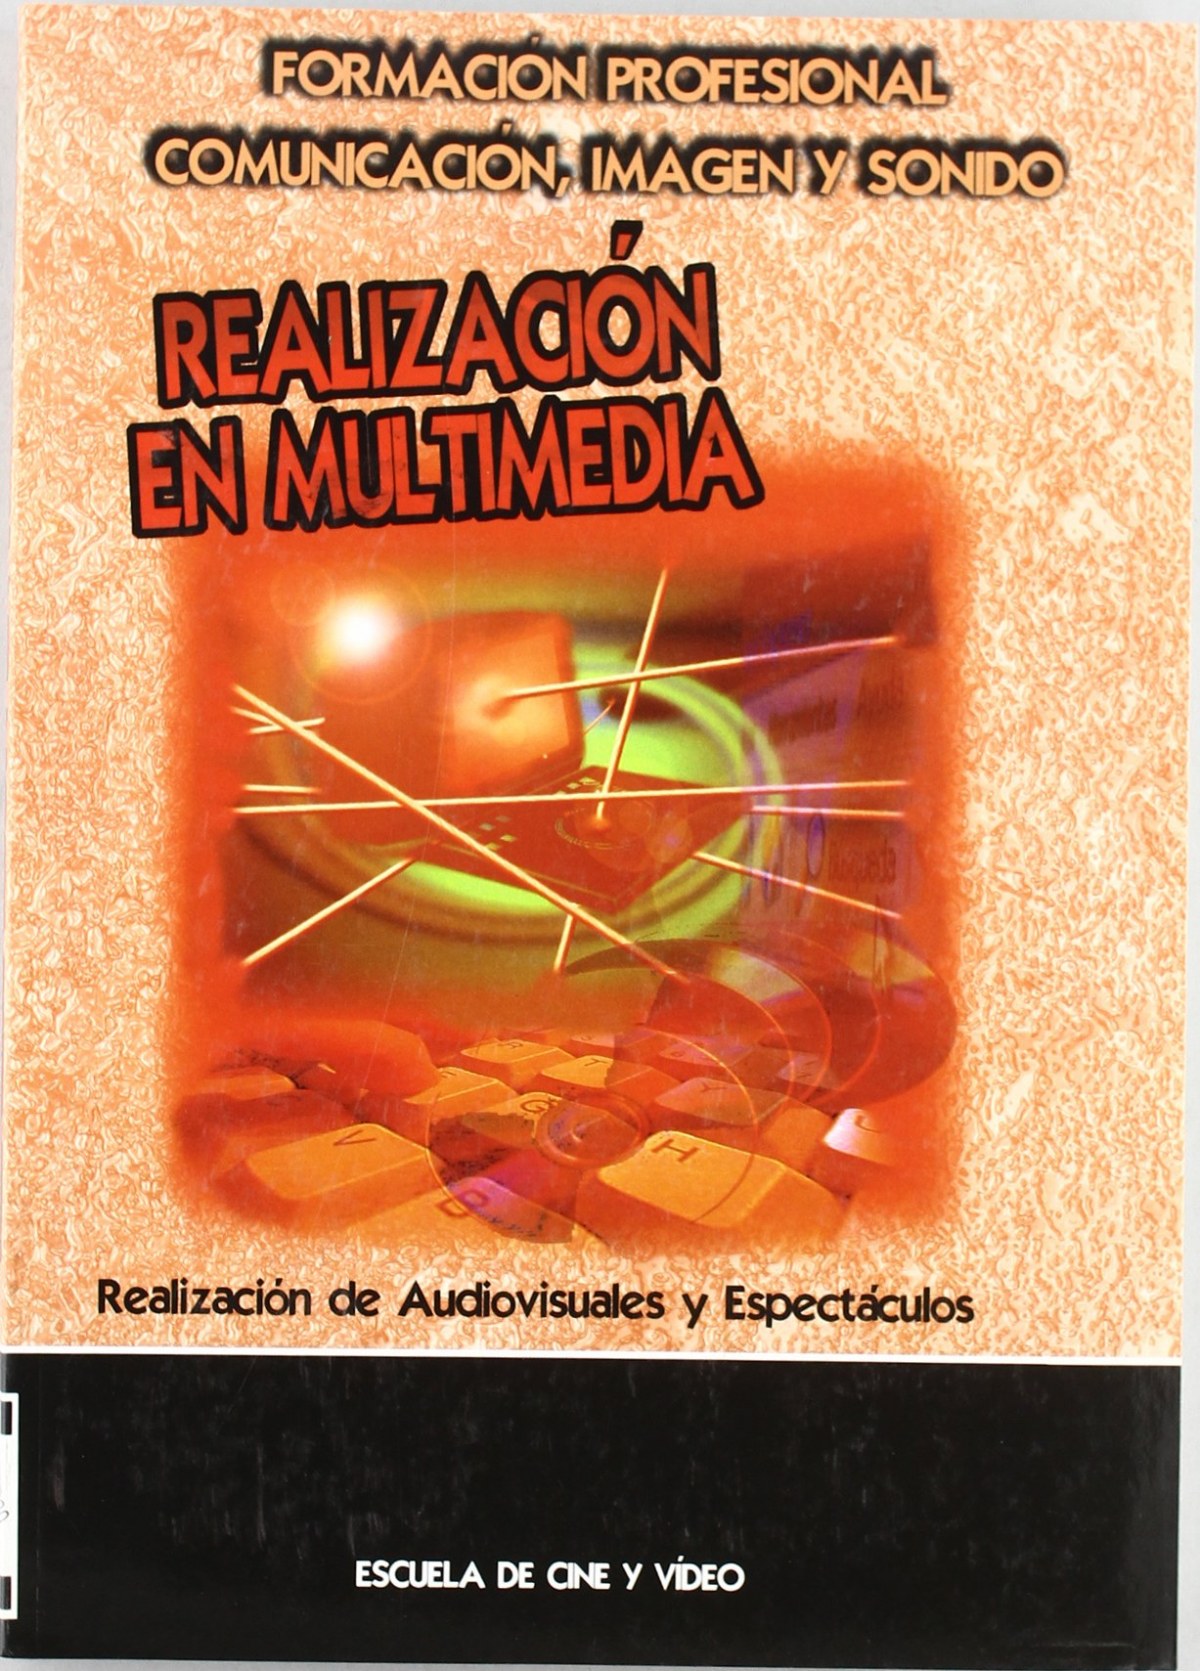 Realización en multimedia - Donostiarra